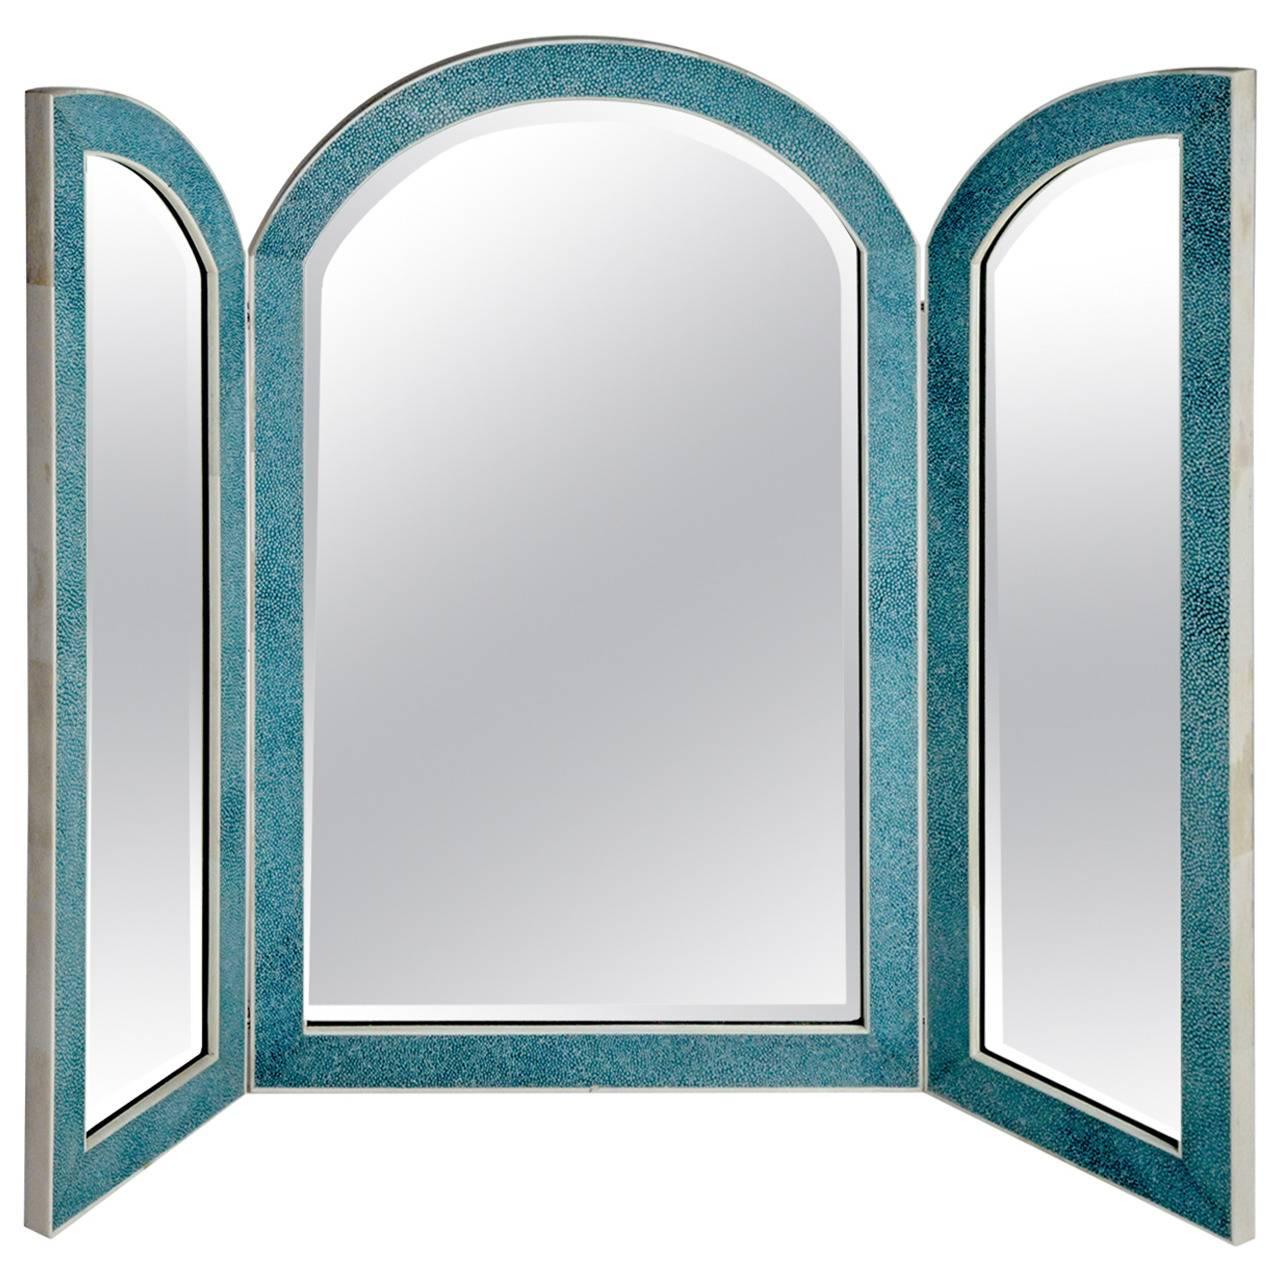 Turquoise Tri-Fold Shagreen Mirror